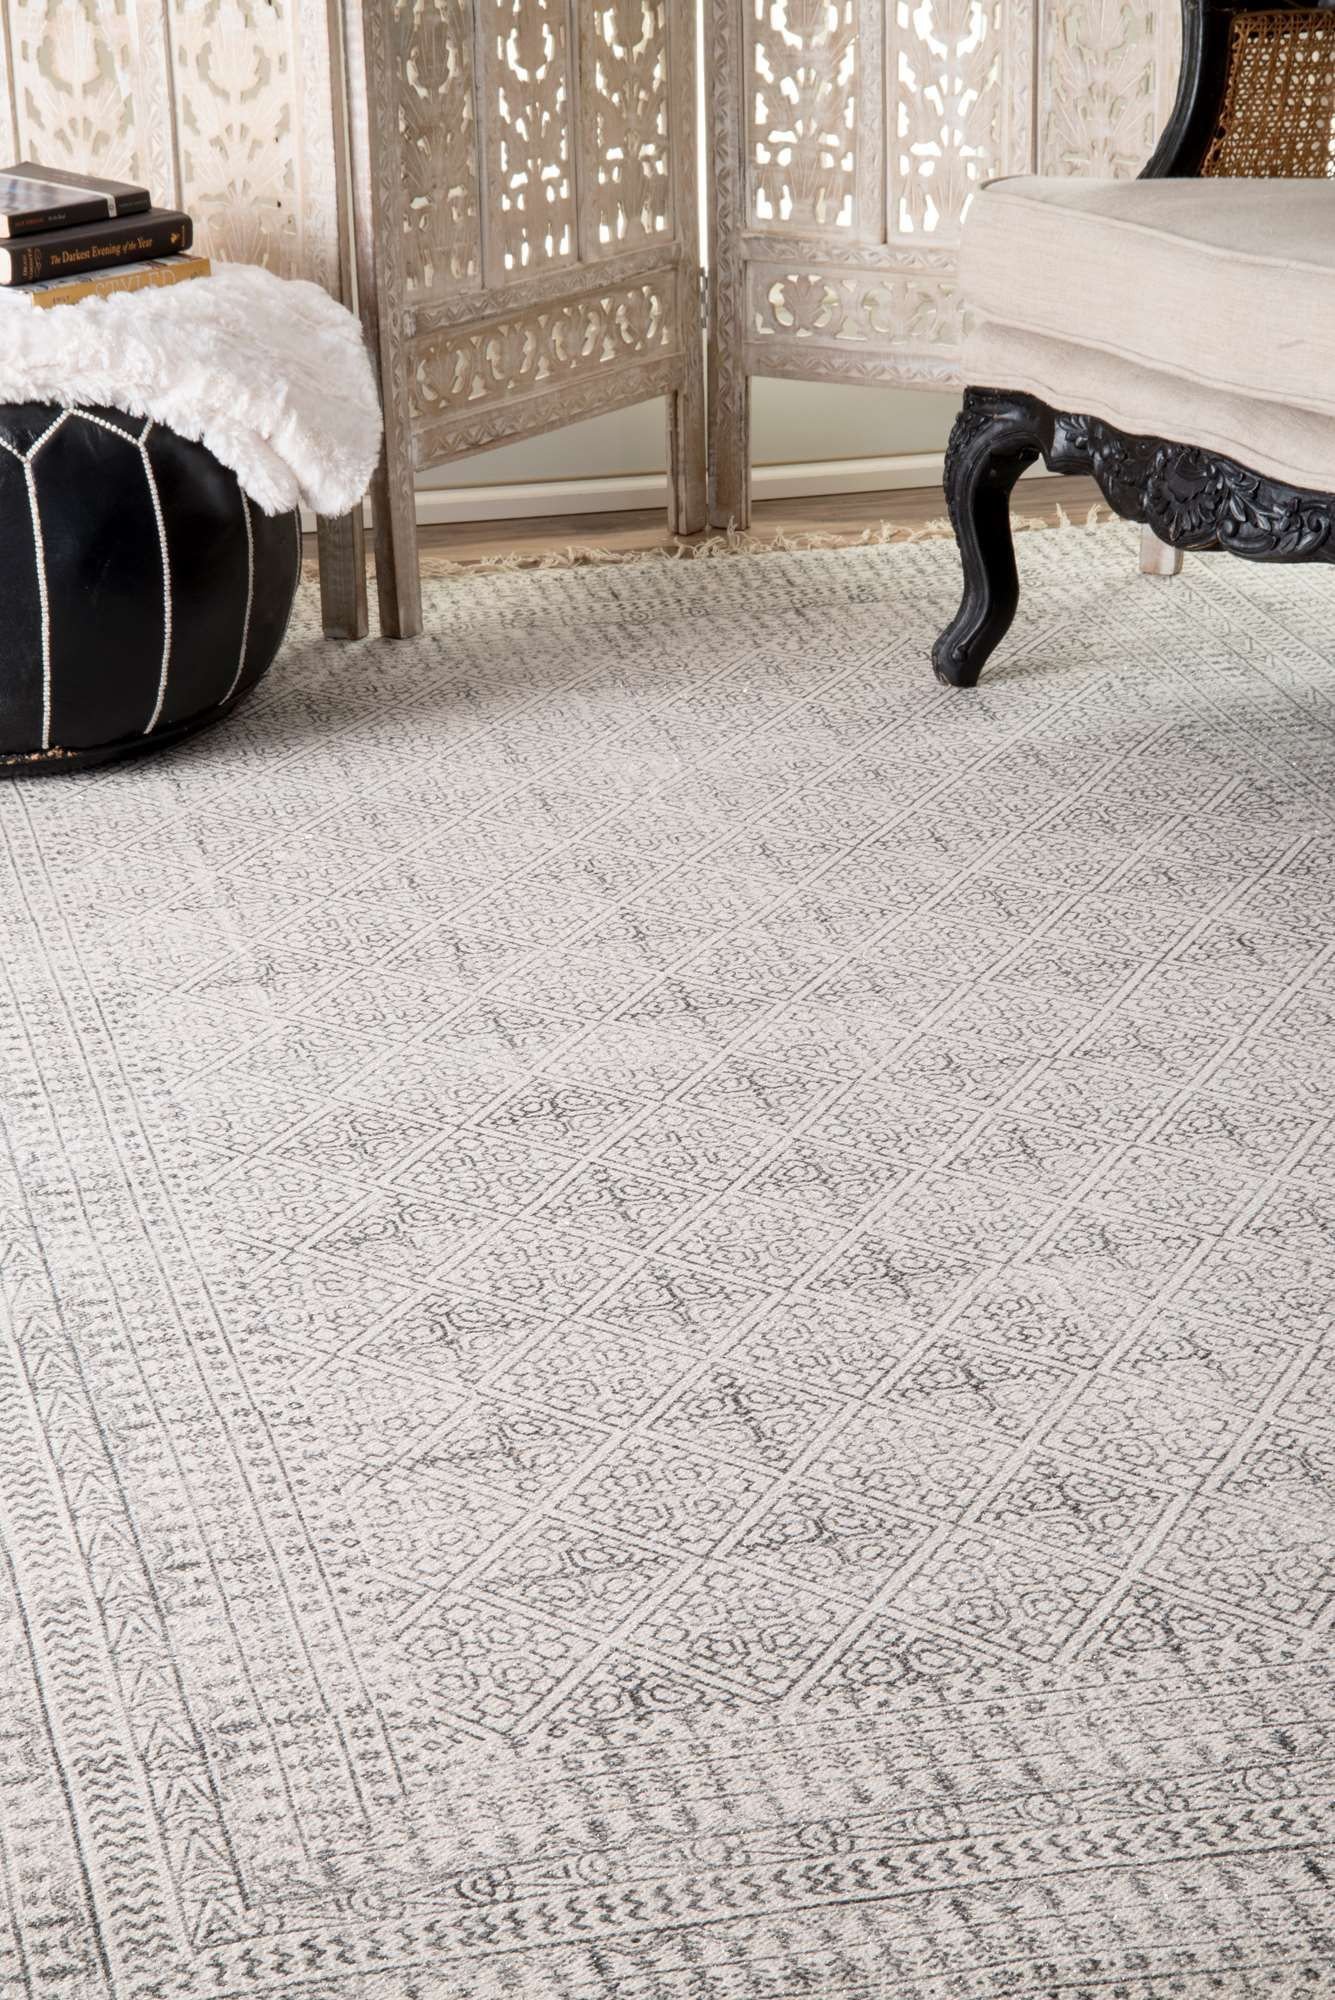 Fluffy Carpet for Bedroom Beautiful 23 Popular Hardwood Floor Bedroom Rug